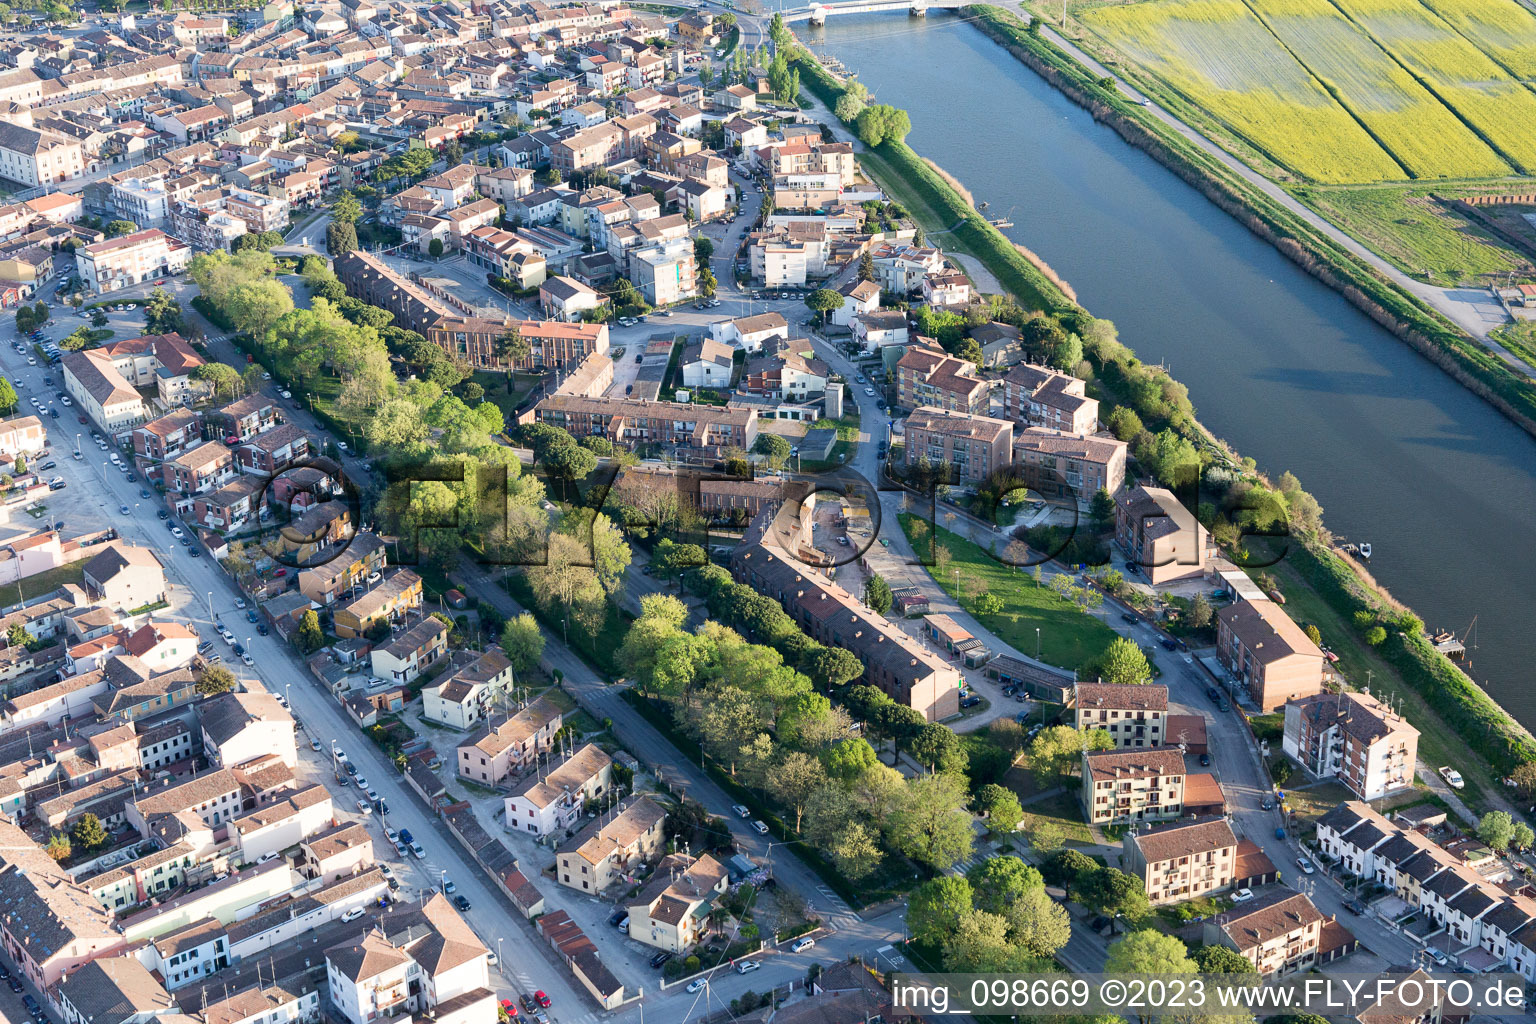 Luftbild von Comacchio im Bundesland Ferrara, Italien